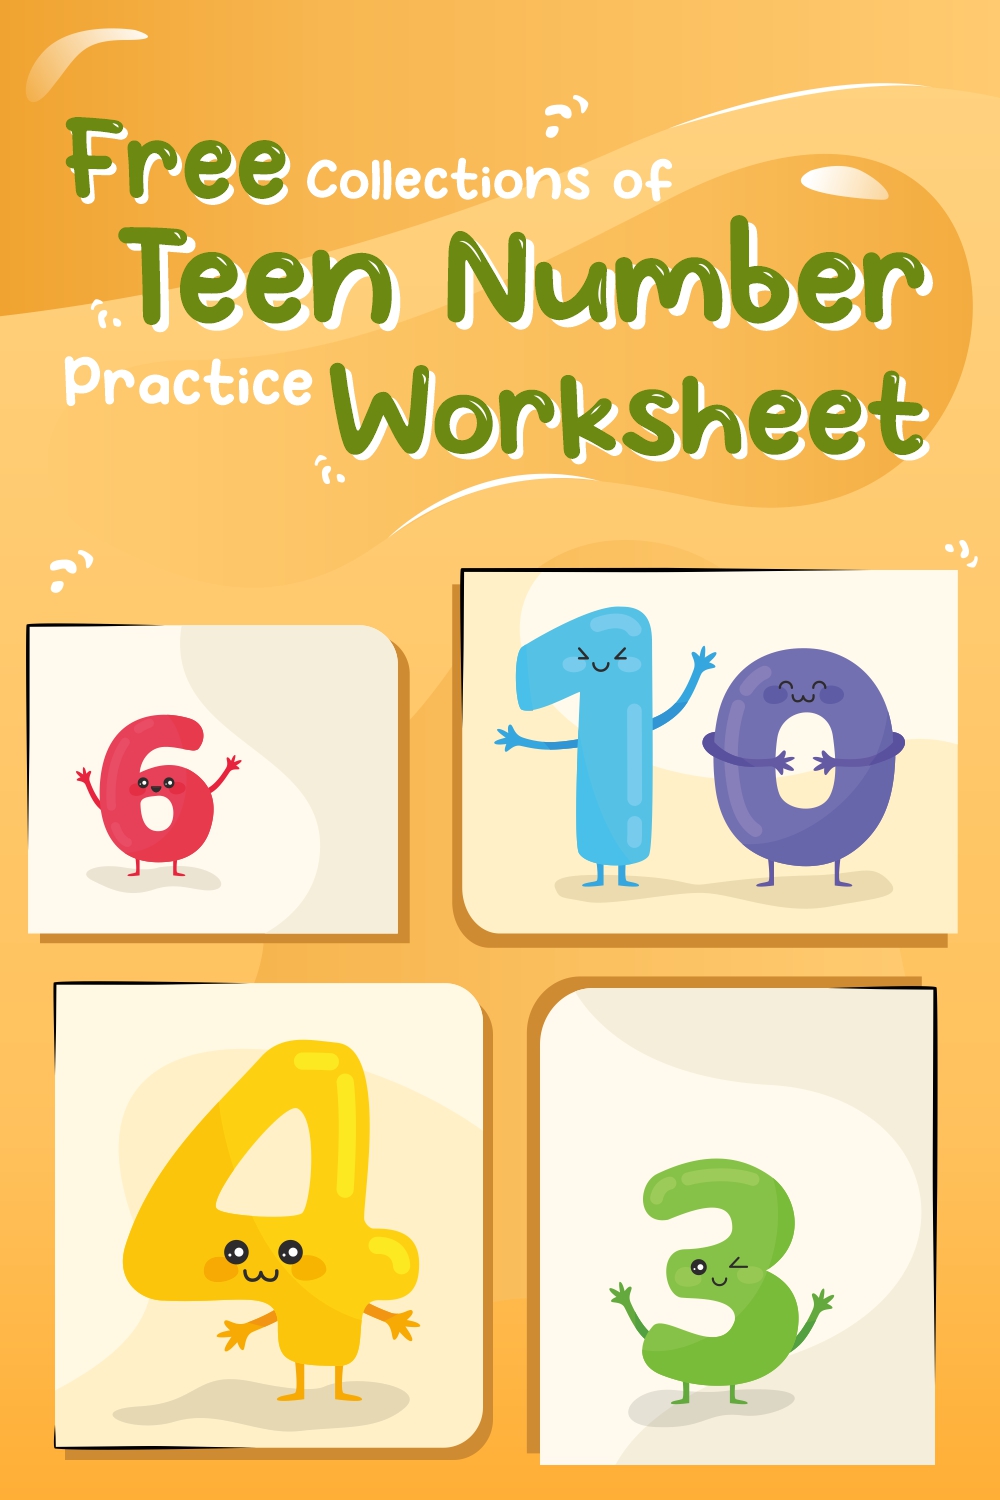 18 Images of Teen Number Practice Worksheet